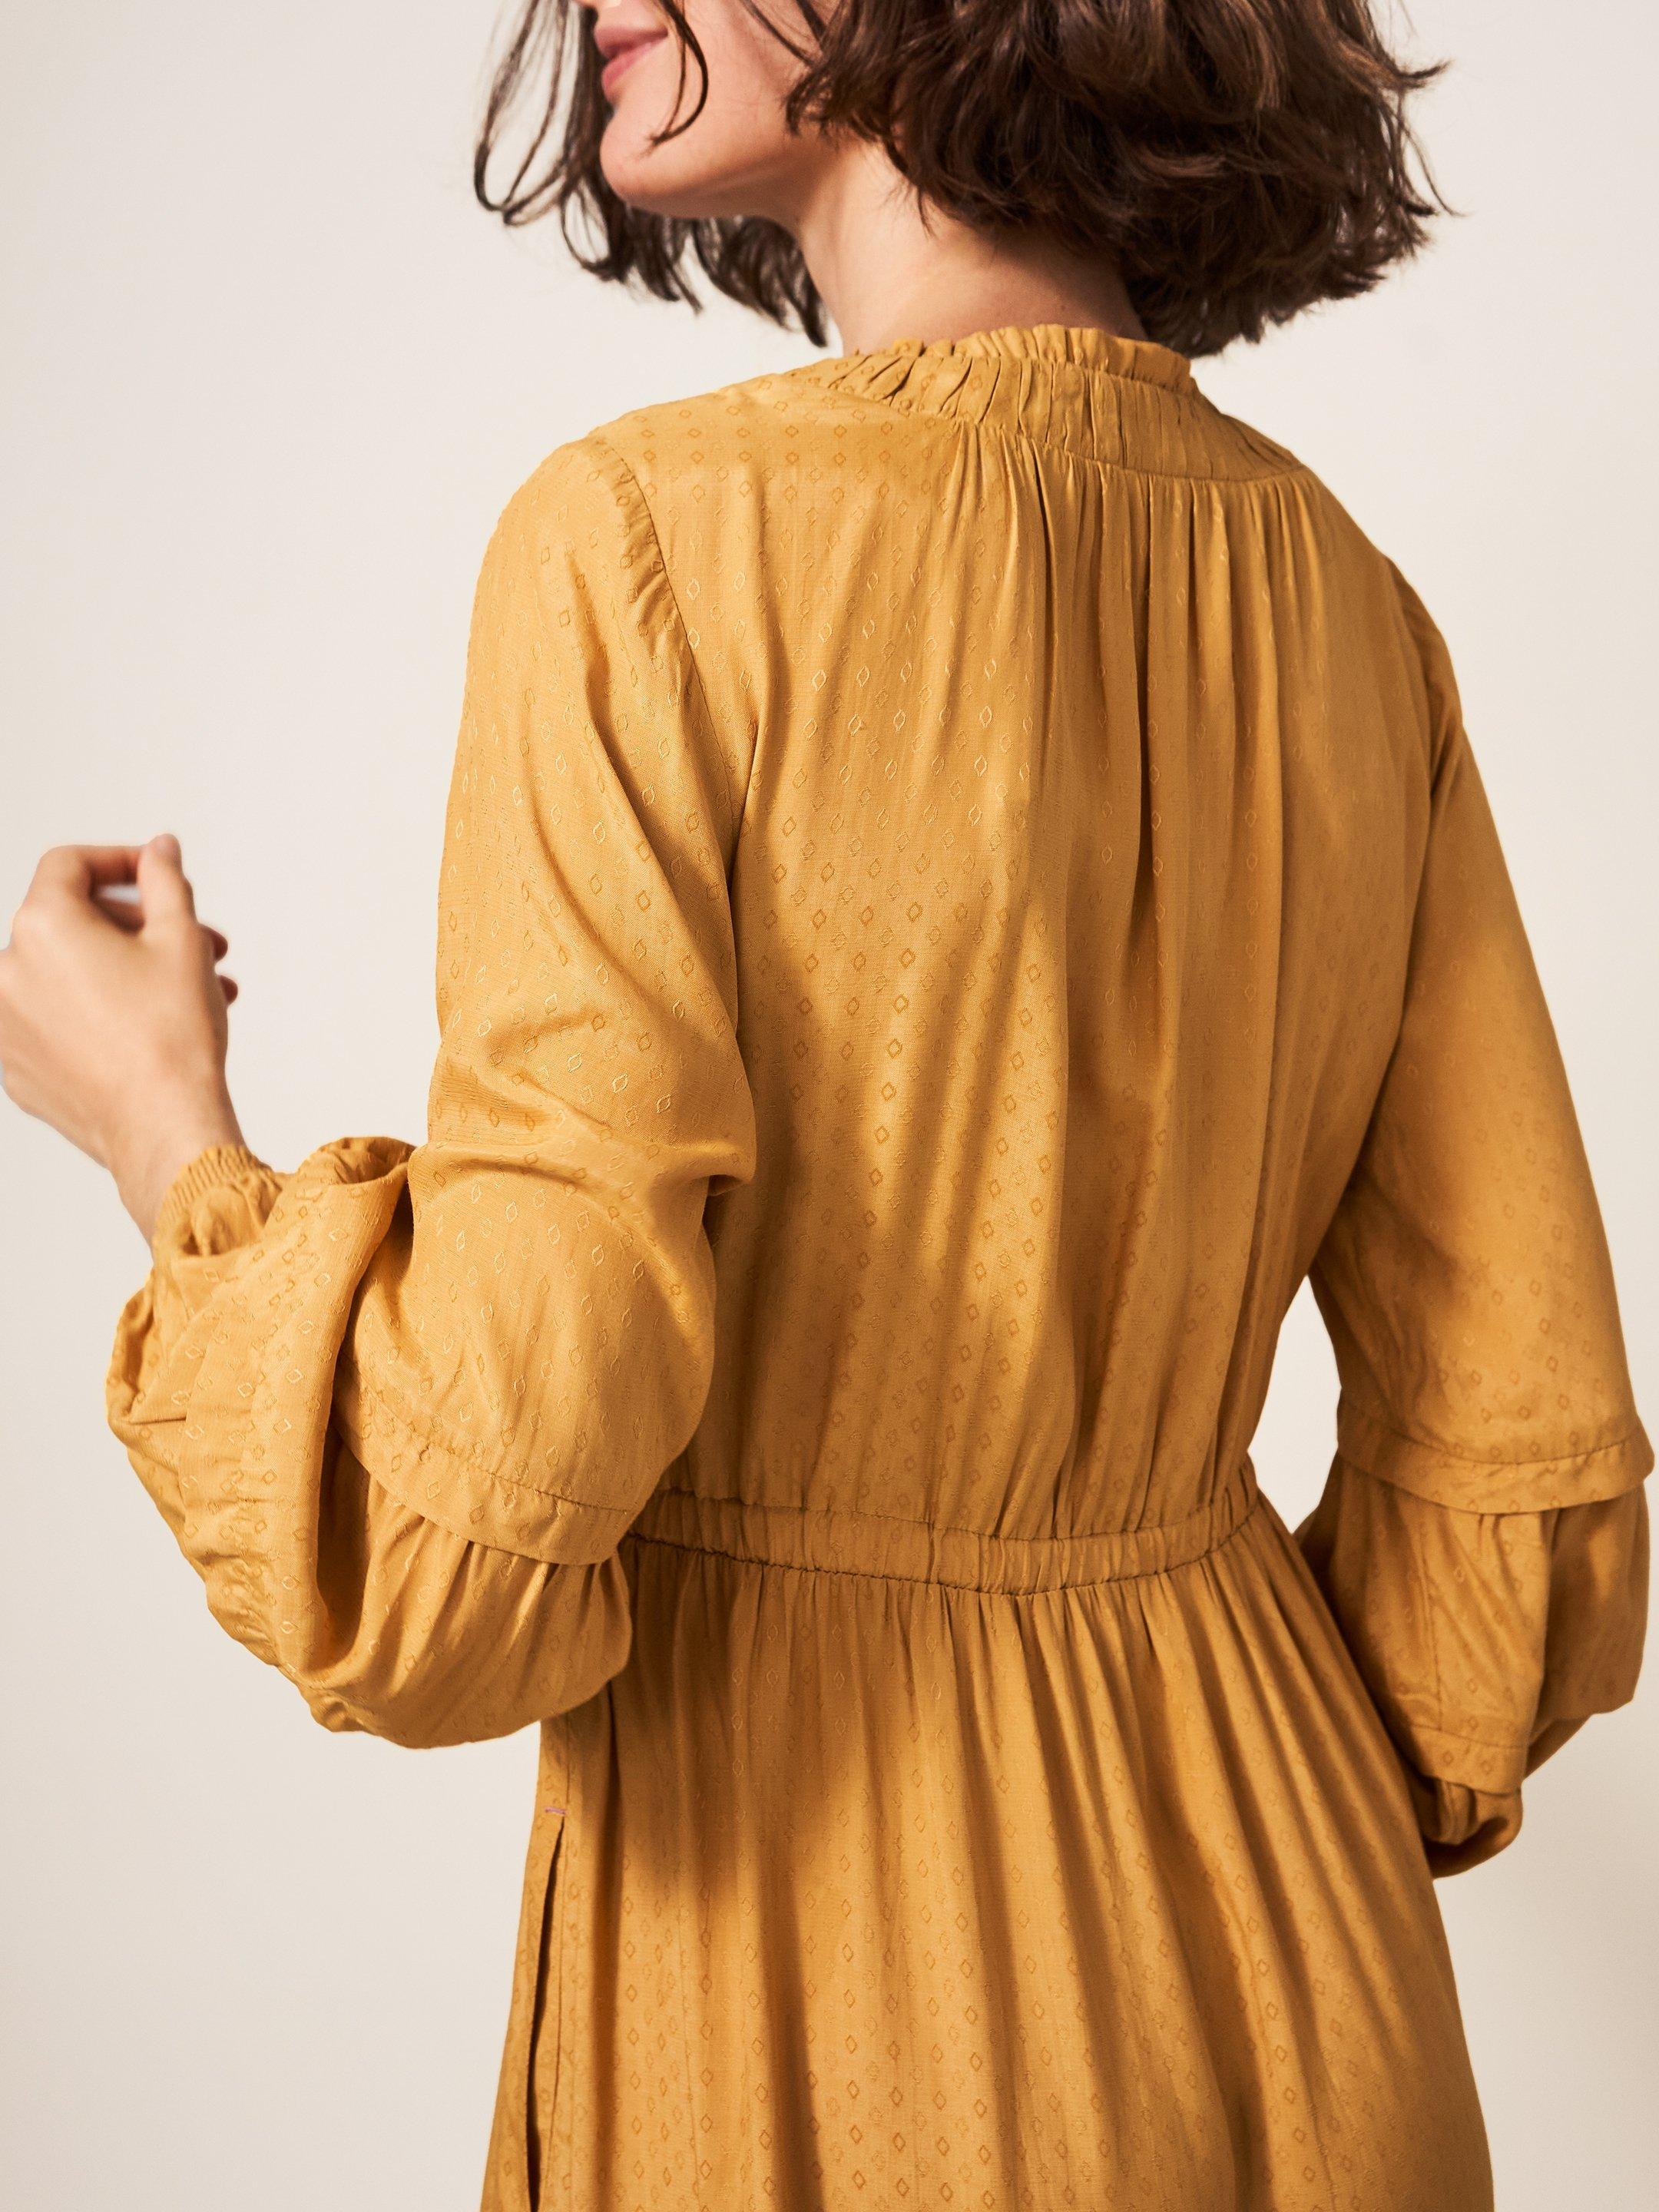 Maisy Midi Dress in LGT YELLOW - MODEL DETAIL